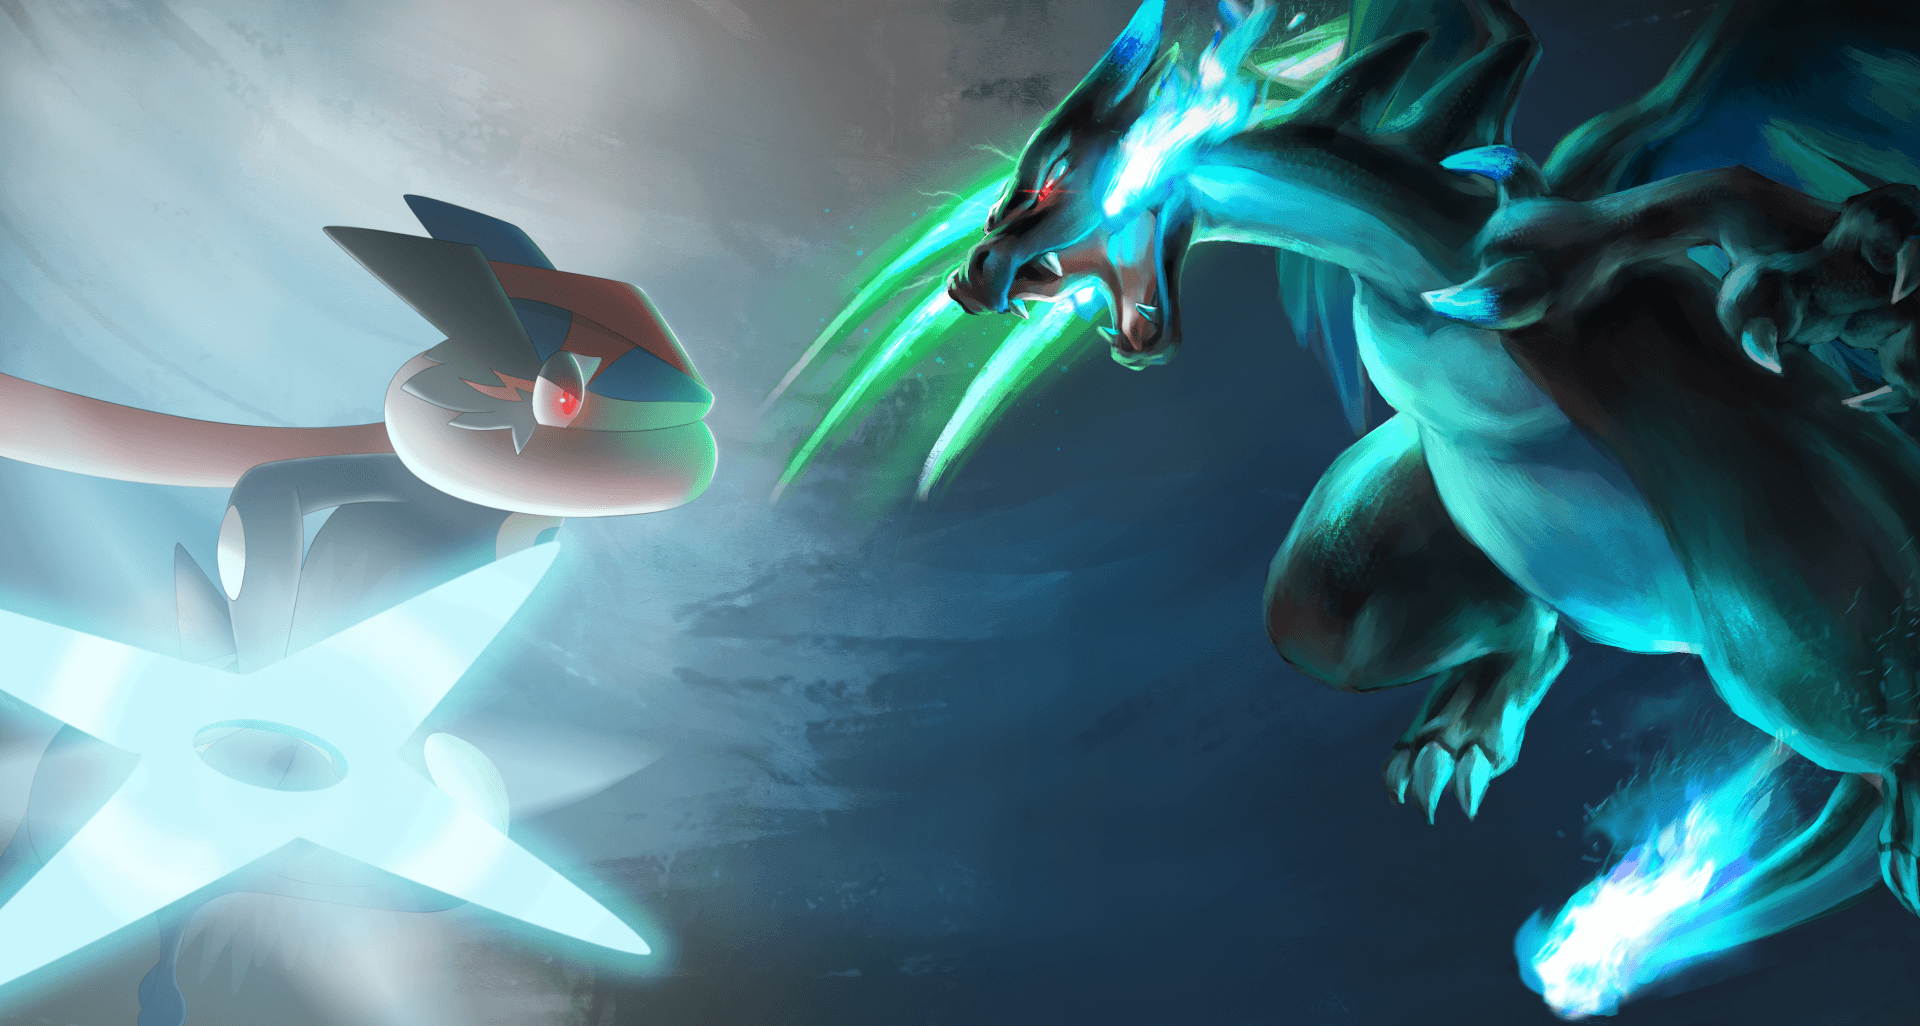 Mega Charizard X (Pokémon) HD Wallpaper and Background Image